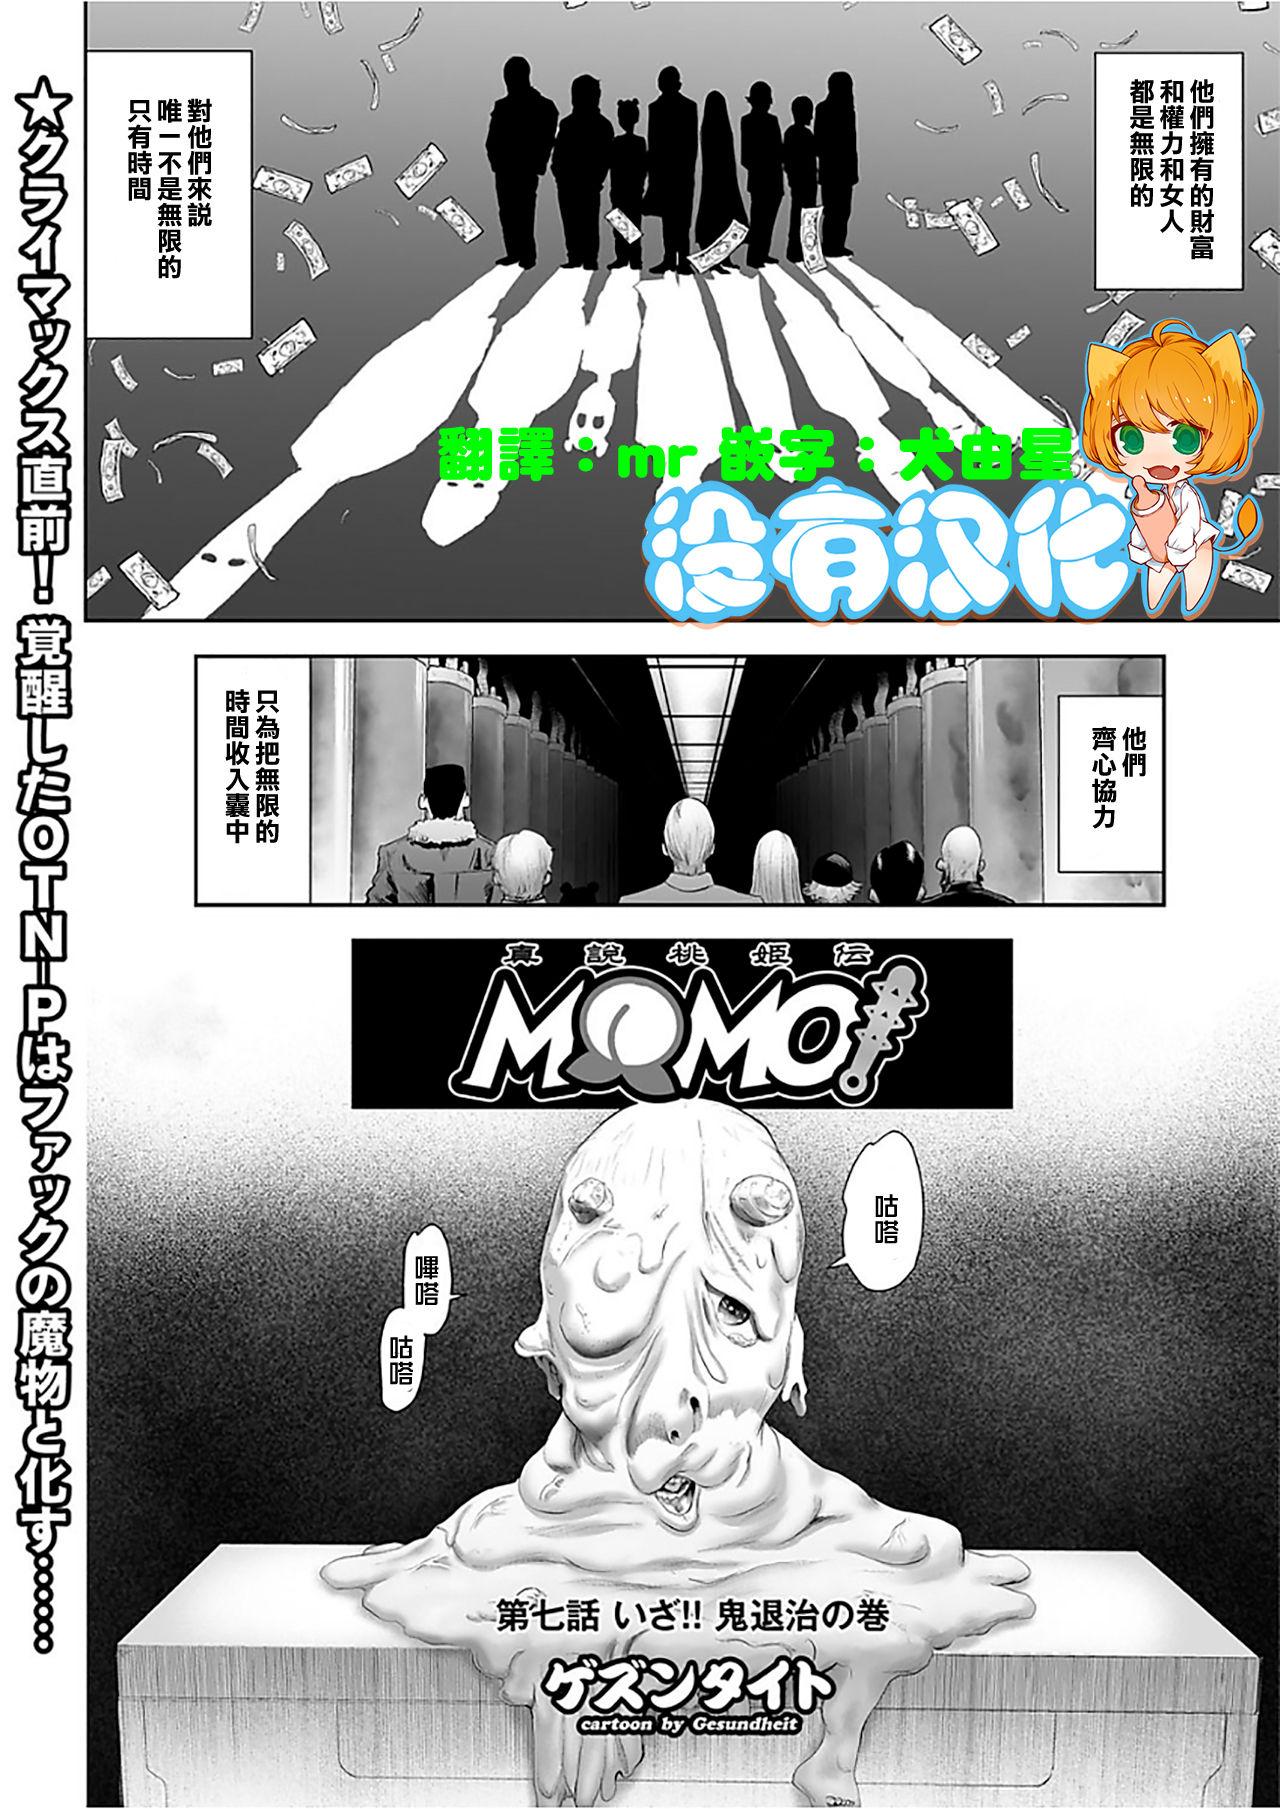 Fetish MOMO! Dainanawa Onitaiji No Ken Hard Cock - Picture 1